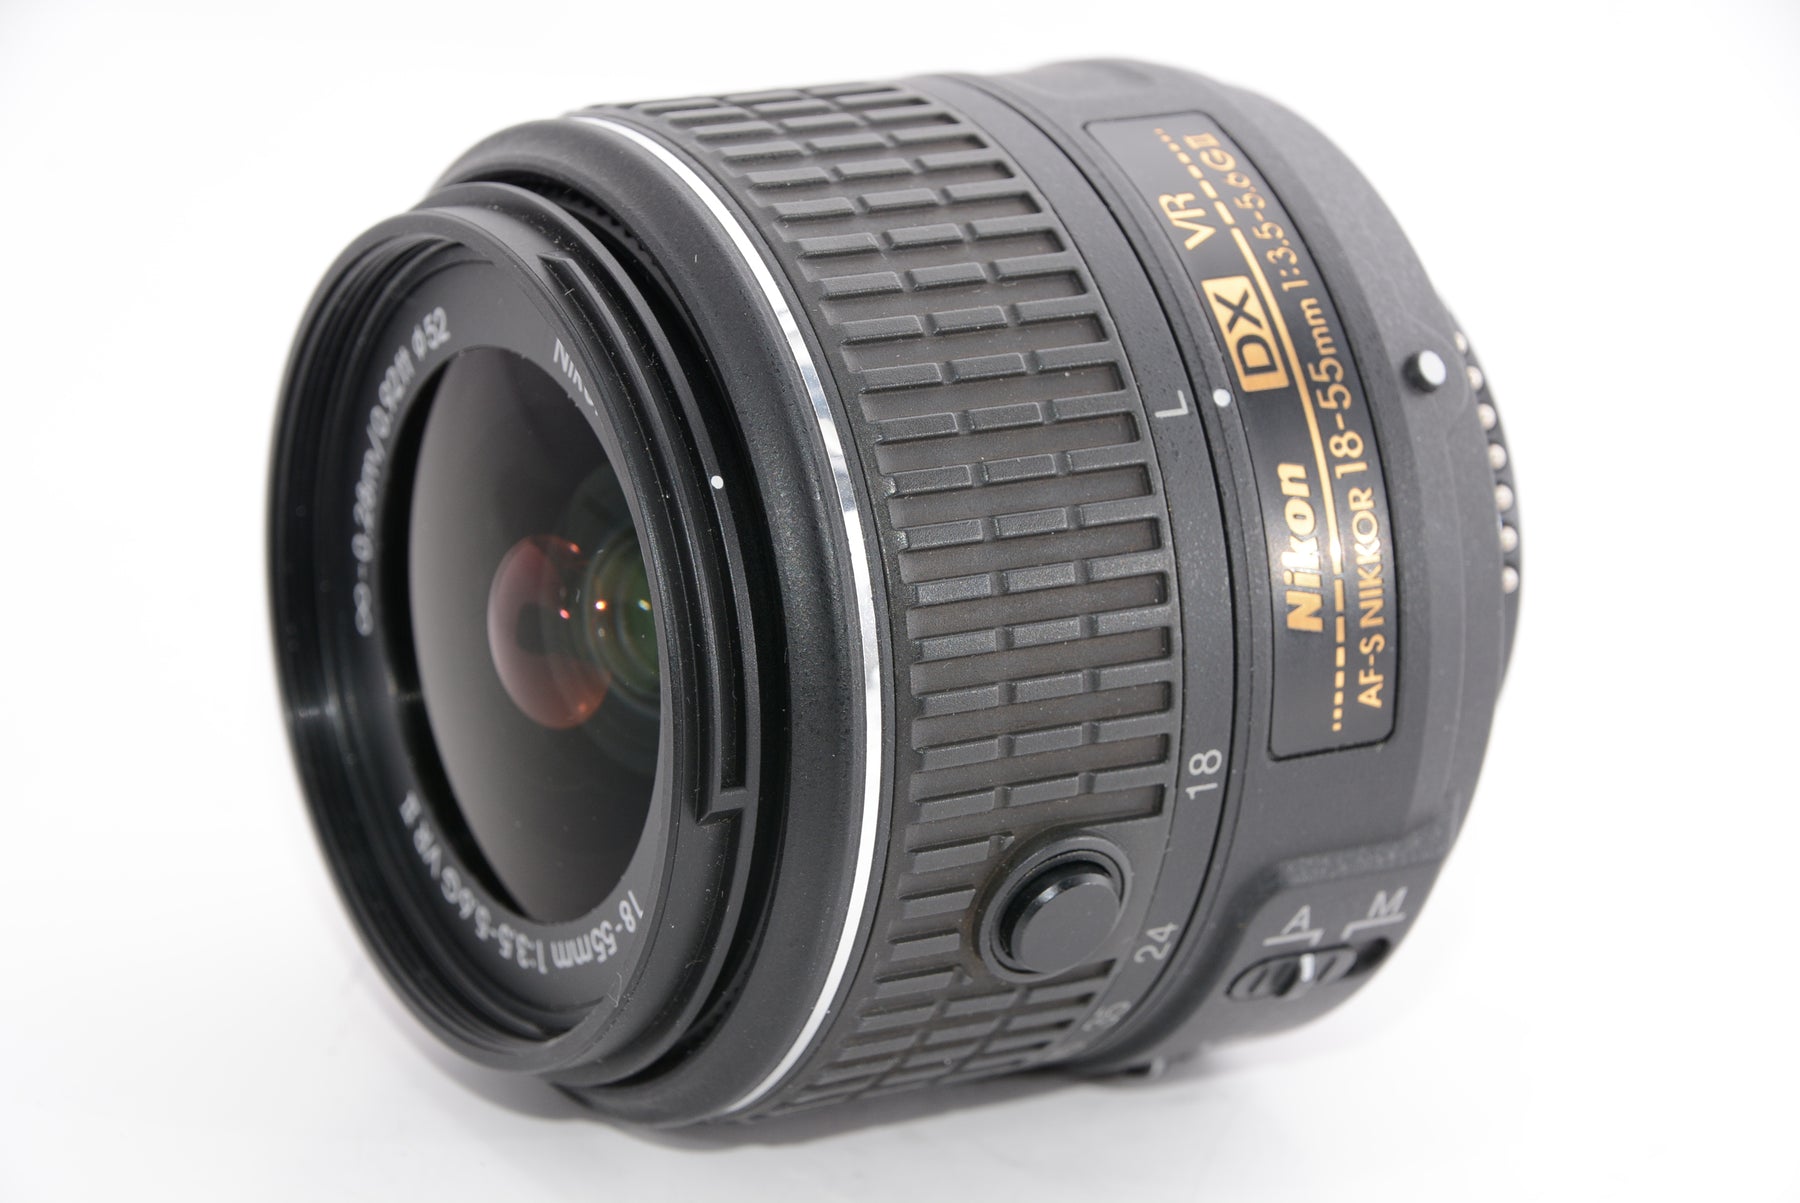 Nikon デジタル一眼レフカメラ D5300 18-55mm VR II レンズキット ブラック 2400万画素 3.2型液晶 D5300LK18- - 3